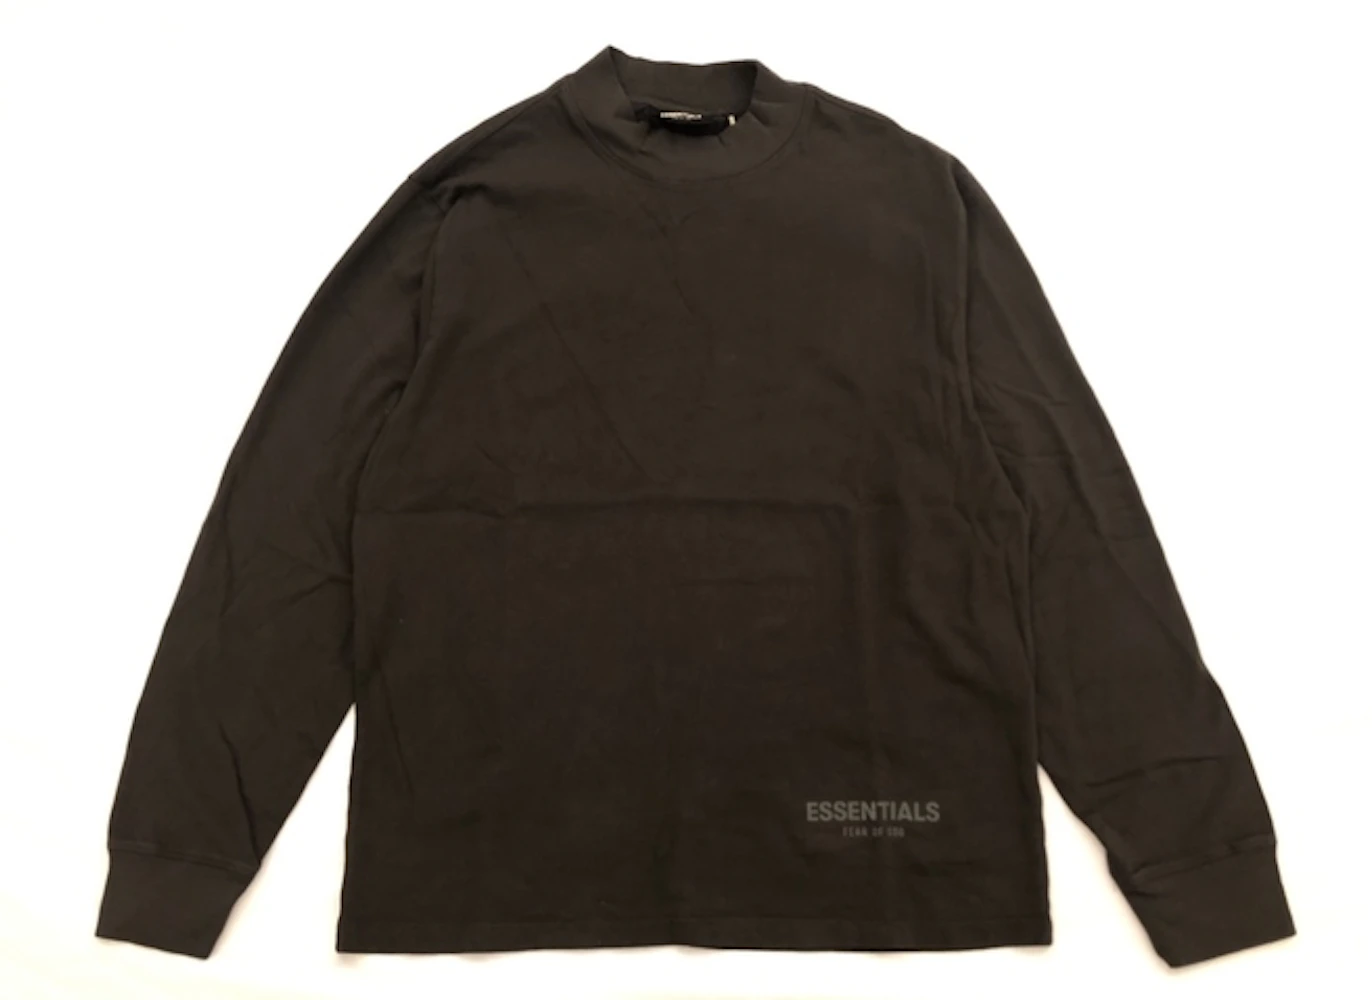 Fear of God Essentials Boxy Long Sleeve T-Shirt Black Ink - FW19 - US